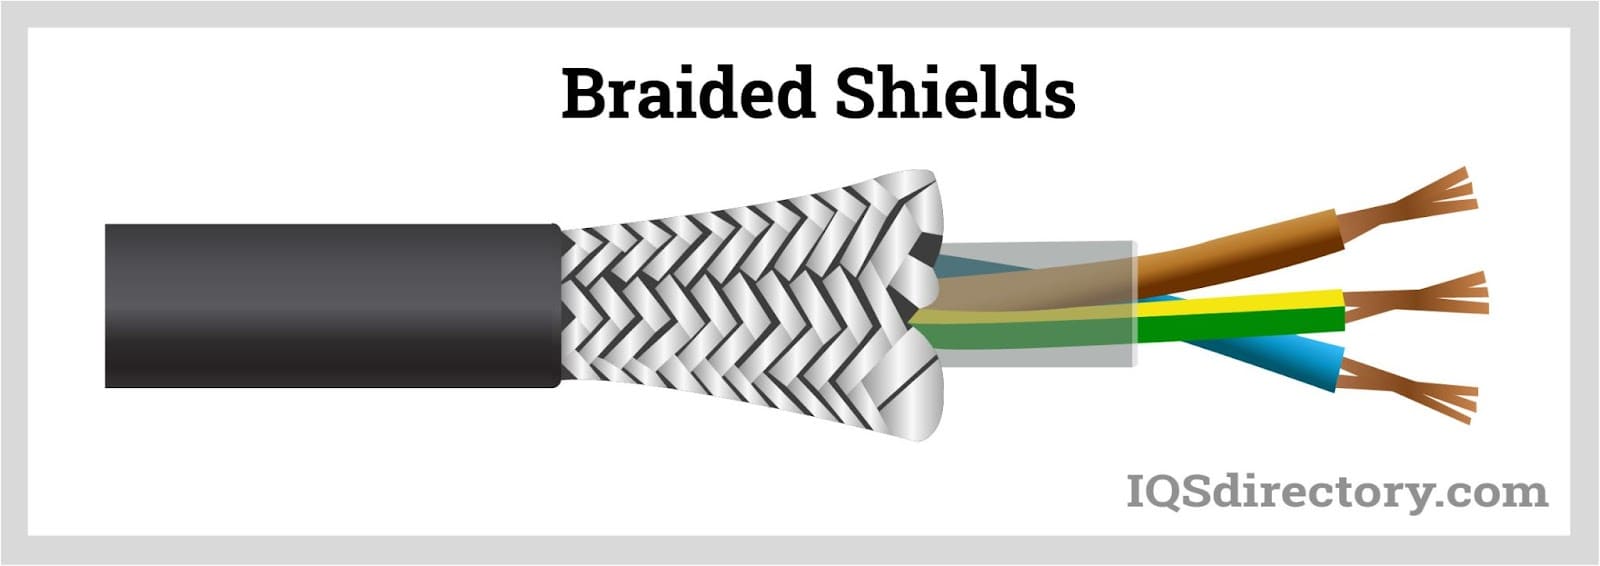 Braided Shields